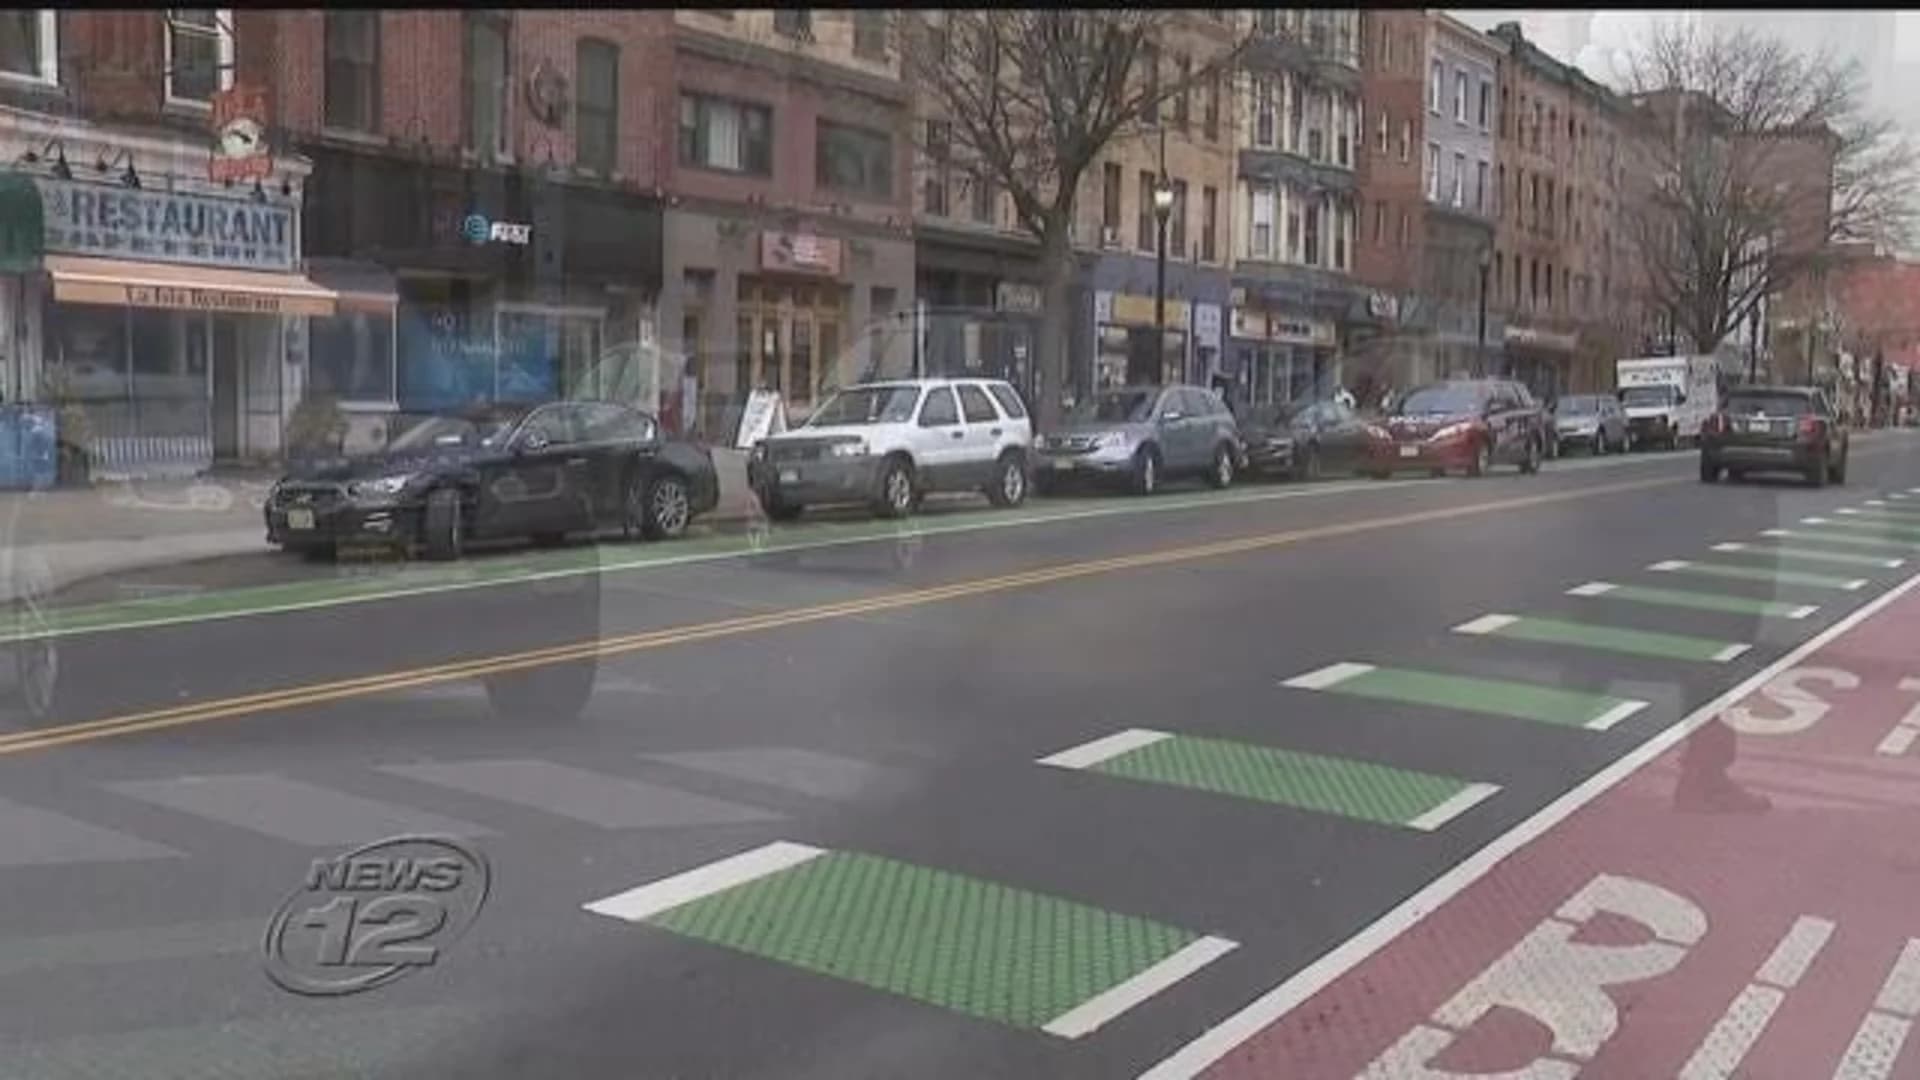 Hoboken raises street parking prices, makes travel easier around the city